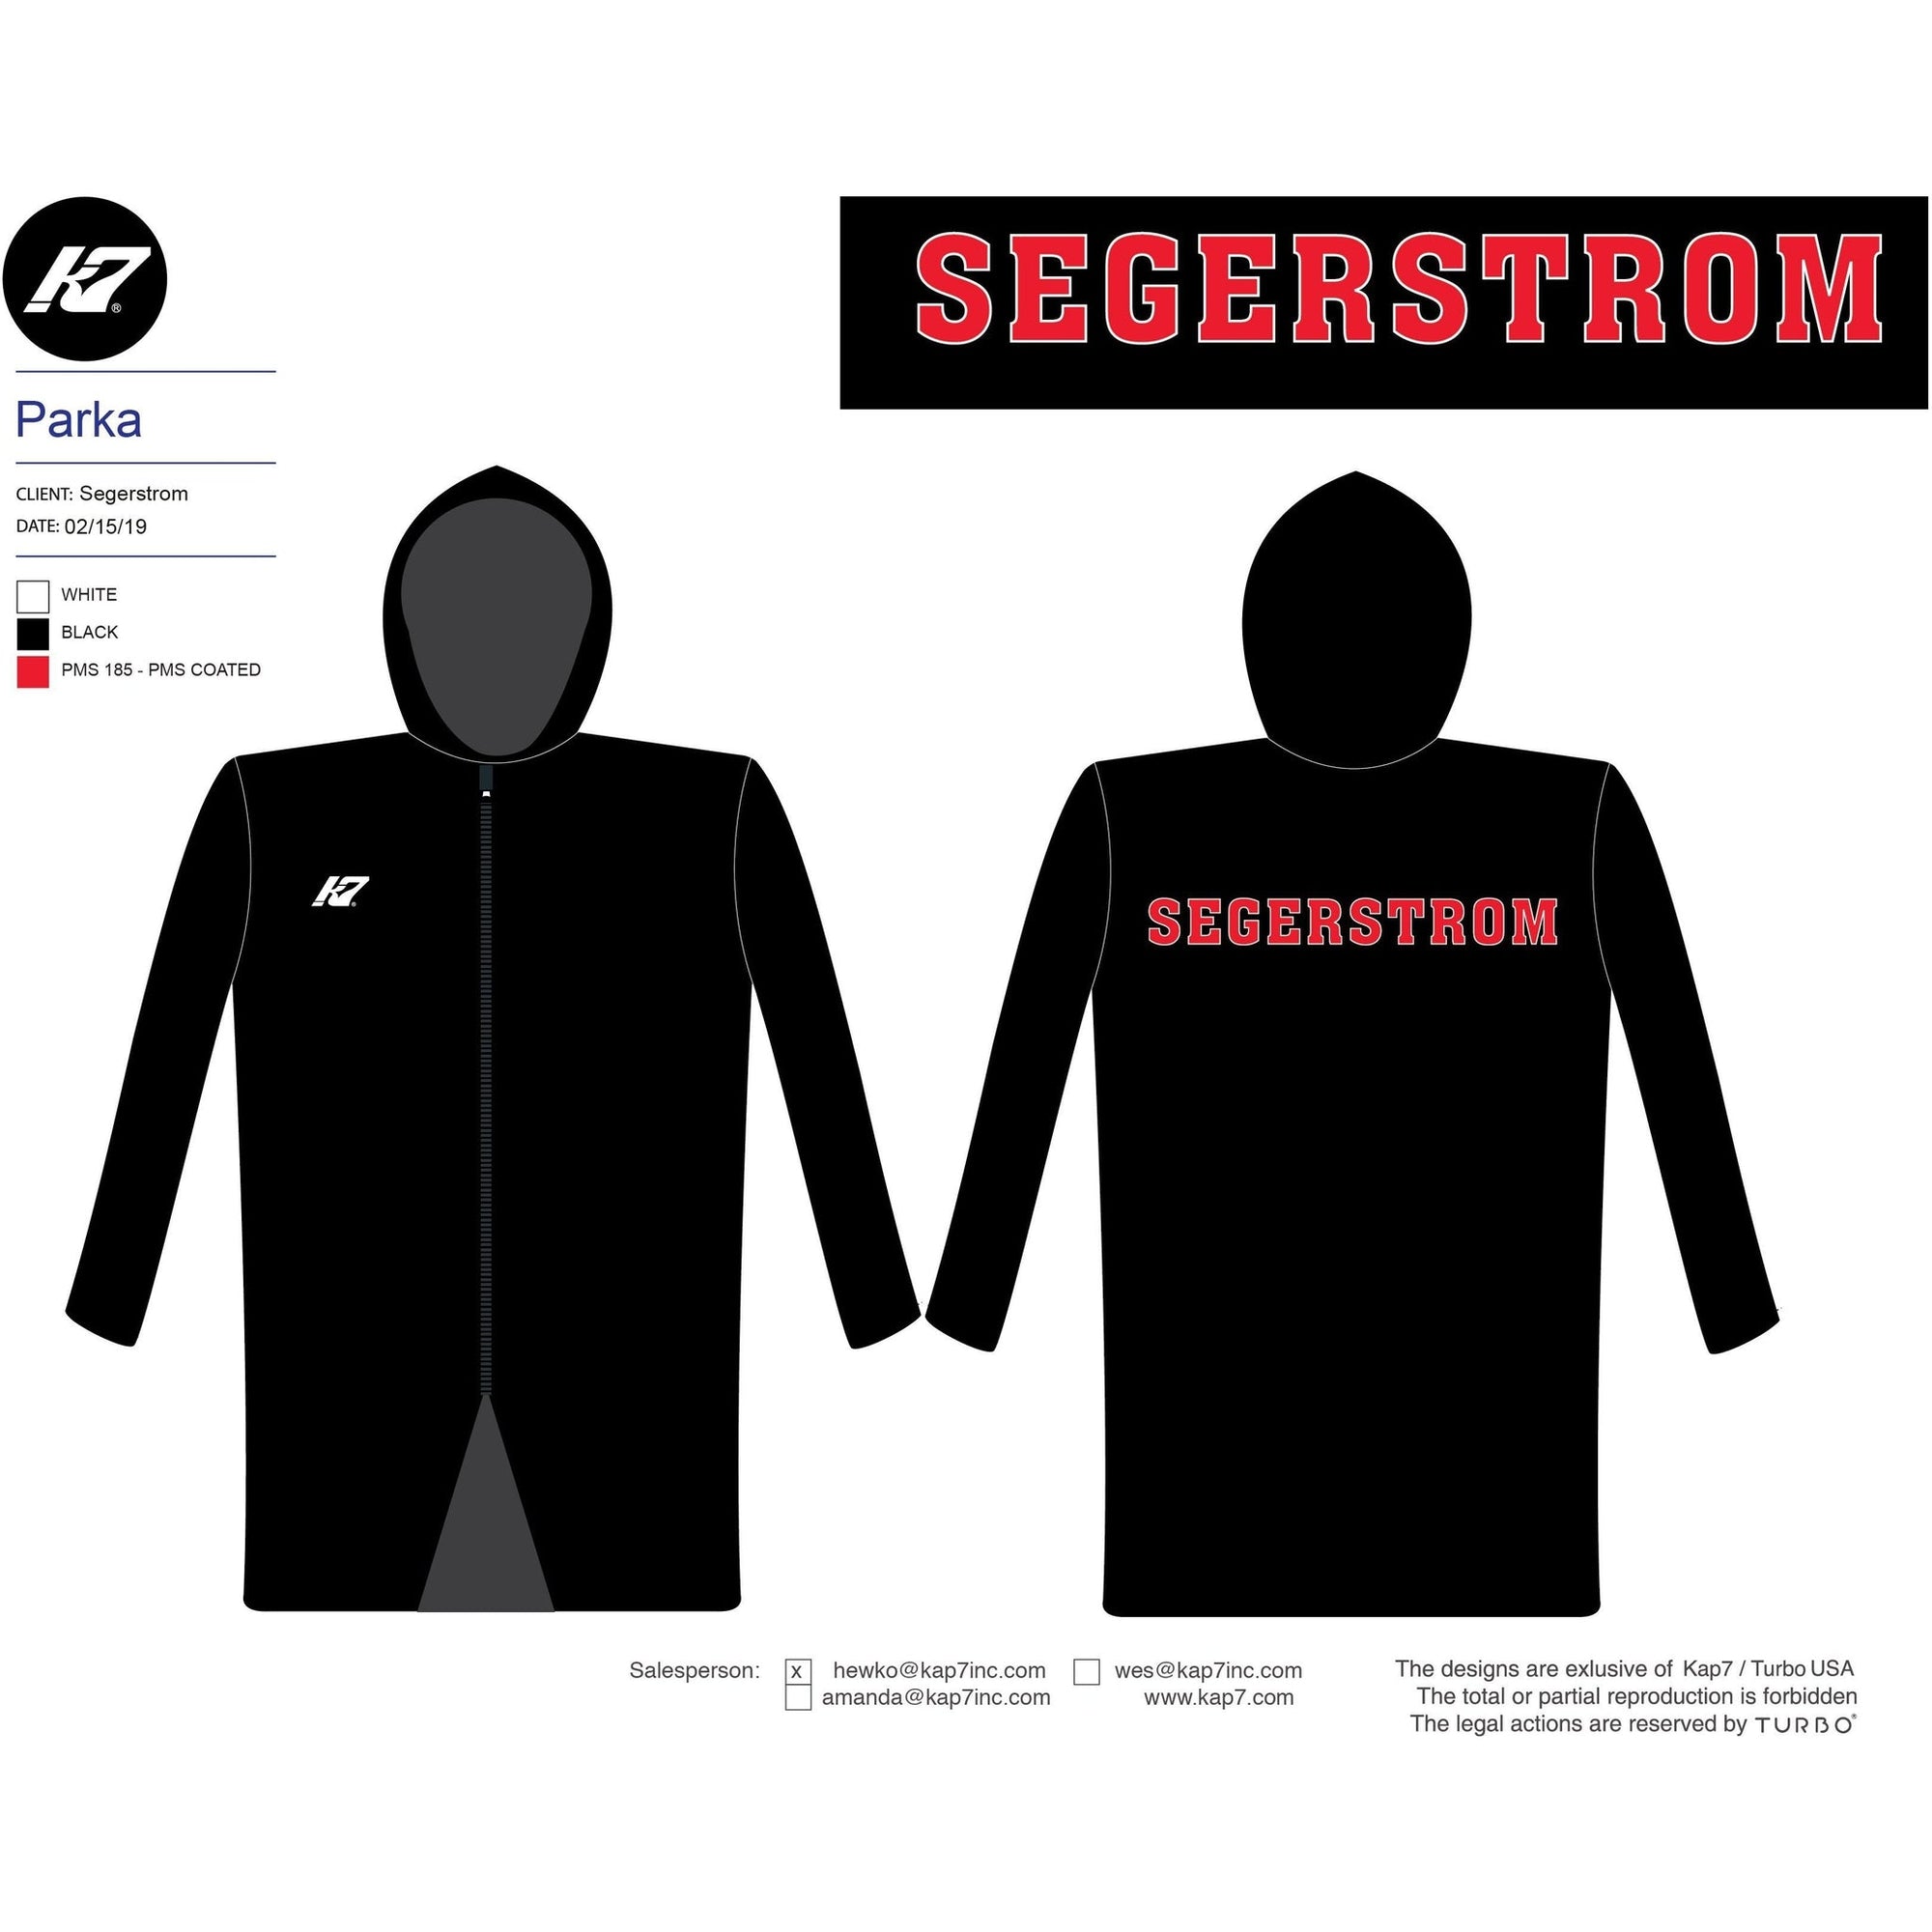 Segerstrom HS Team Store - Aquatics Parka - Last Name KAP7 International 